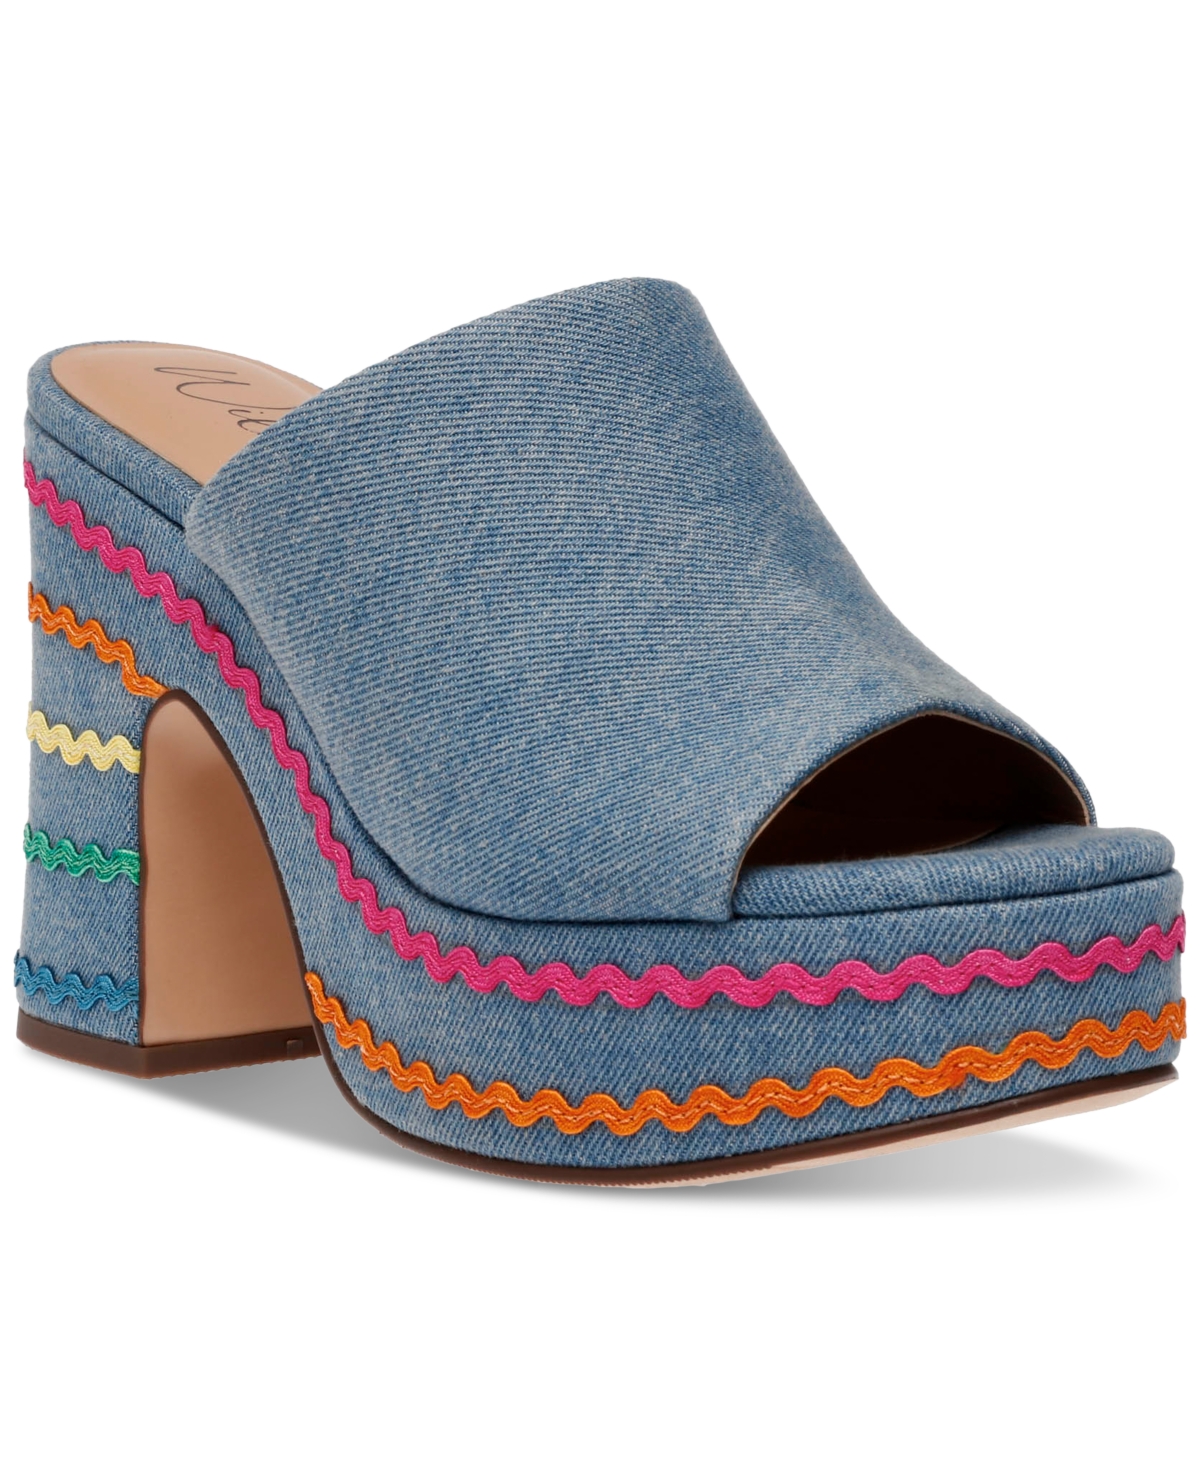 Rosaly Platform Wedge Sandals, Created for Macy's - Denim Multi